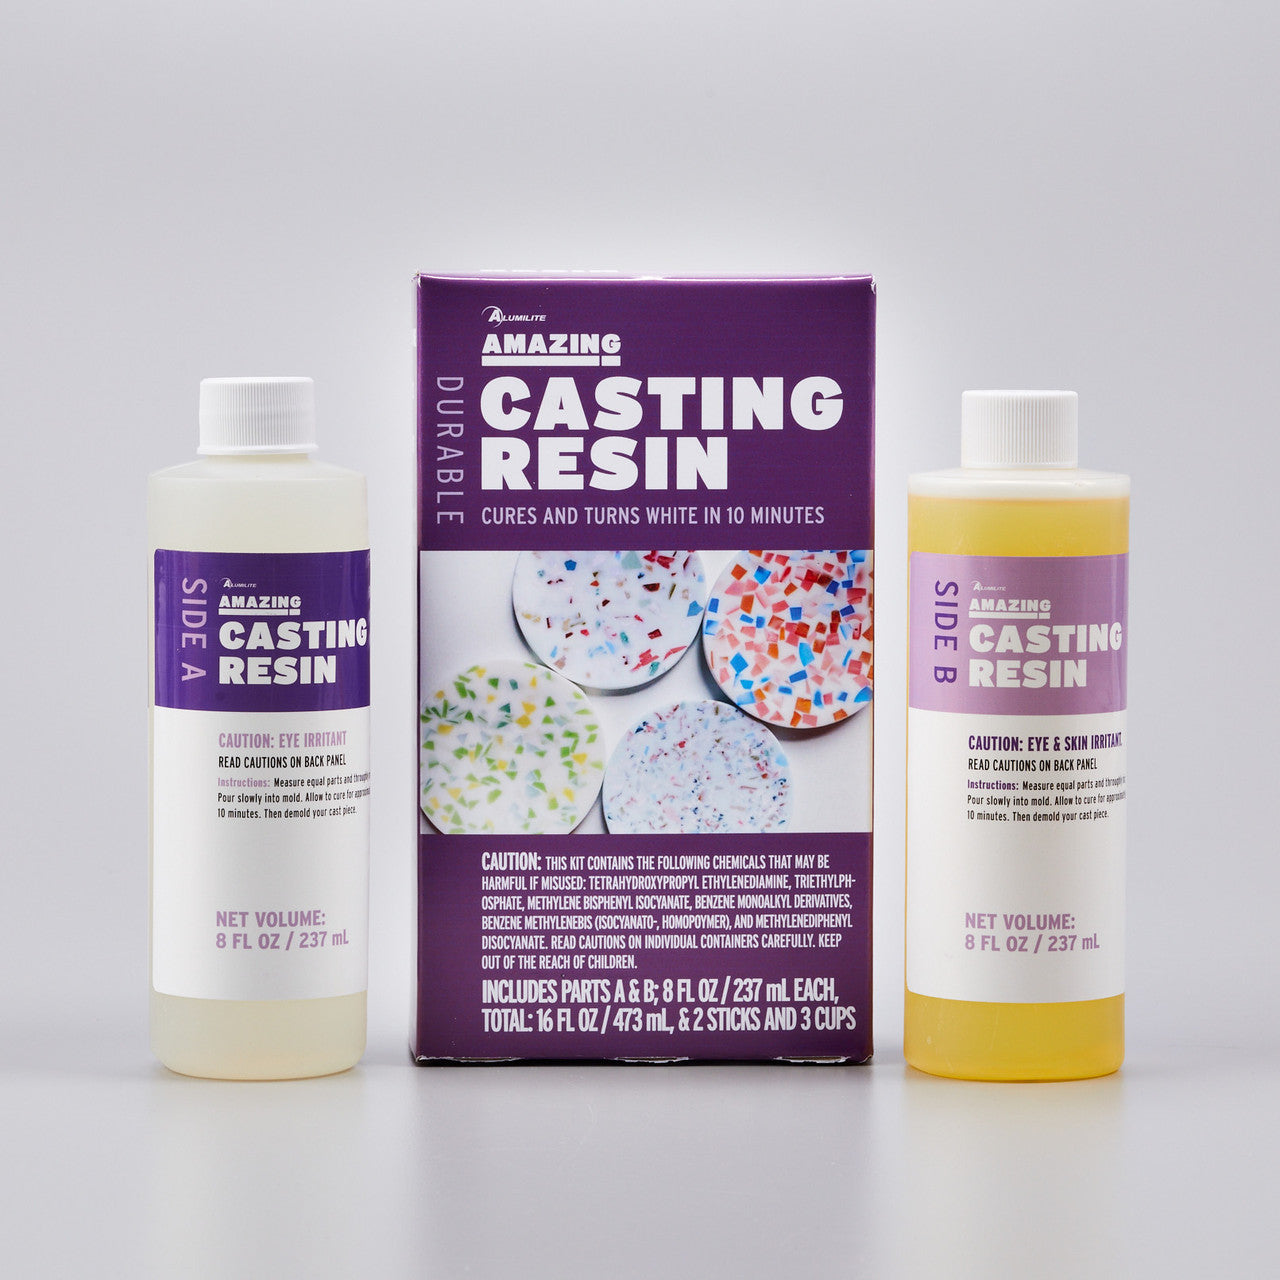 Amazing Casting Resin – Includes Parts A & B; 8 Fl Oz / Total 16 Fl Oz + 2 sticks + 3 cups